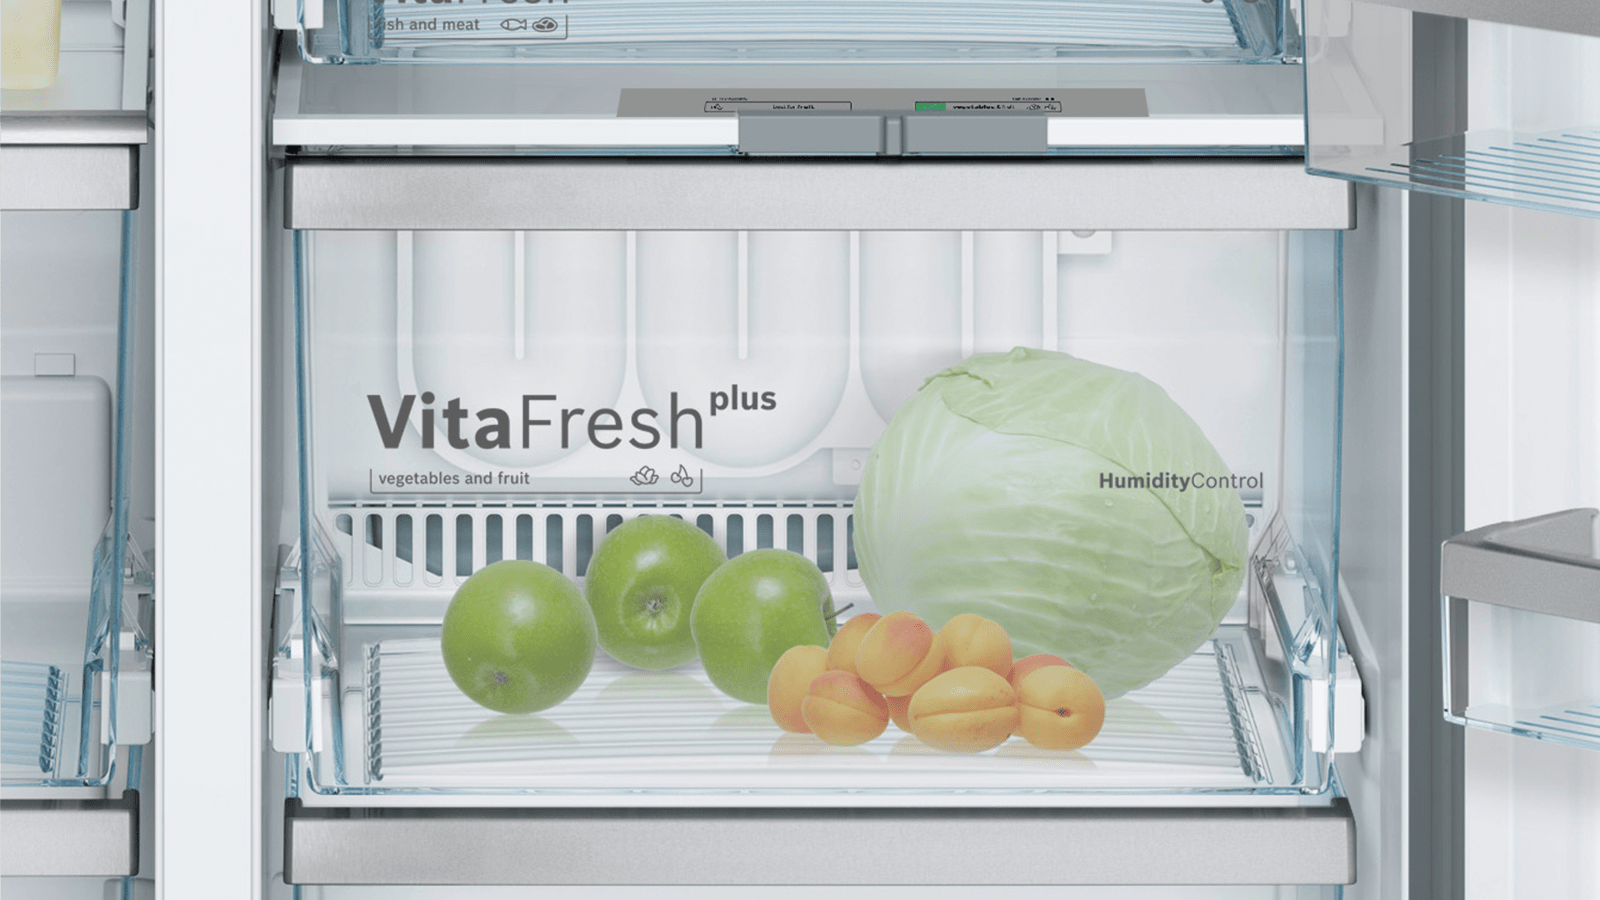 Bosch Vita Fresh serie 2. Холодильник Bosch Vita Fresh Plus. Bosch 8 VITAFRESH Plus. Холодильник 8 часов